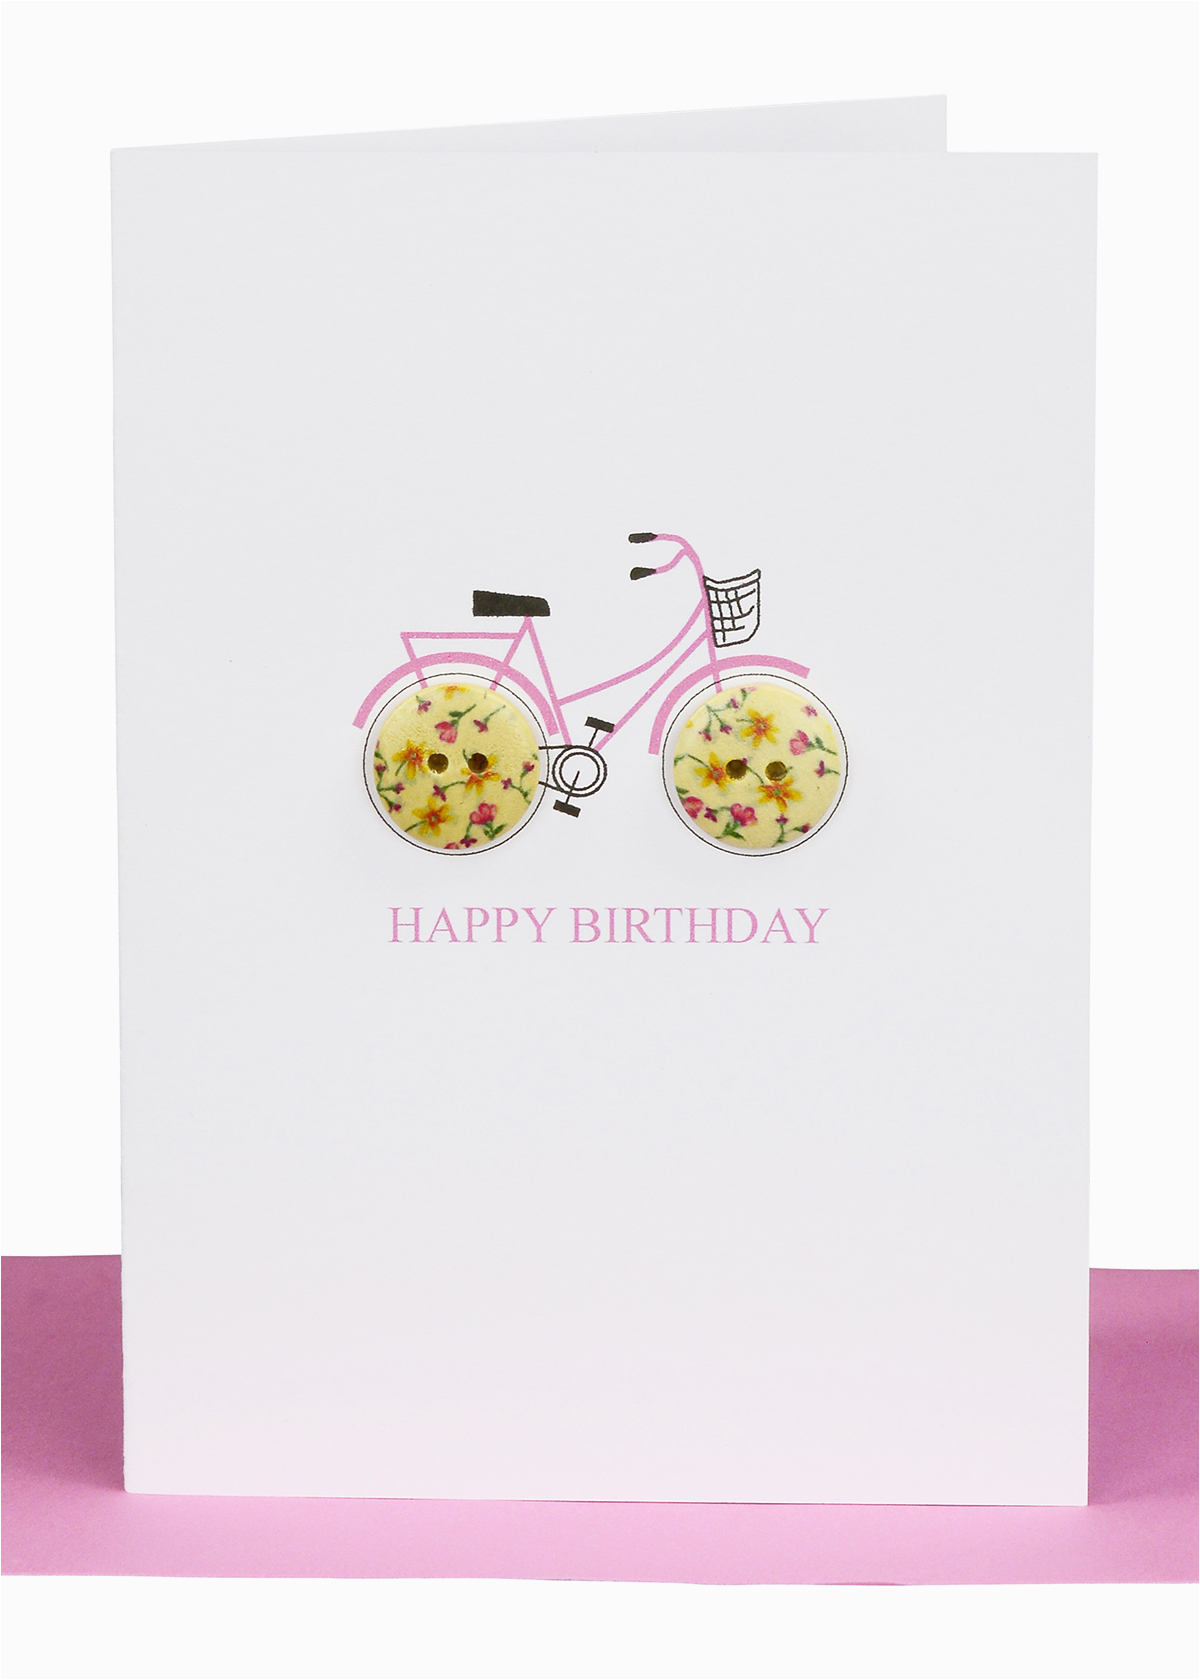 wholesale happy birthday greeting card lbg 114